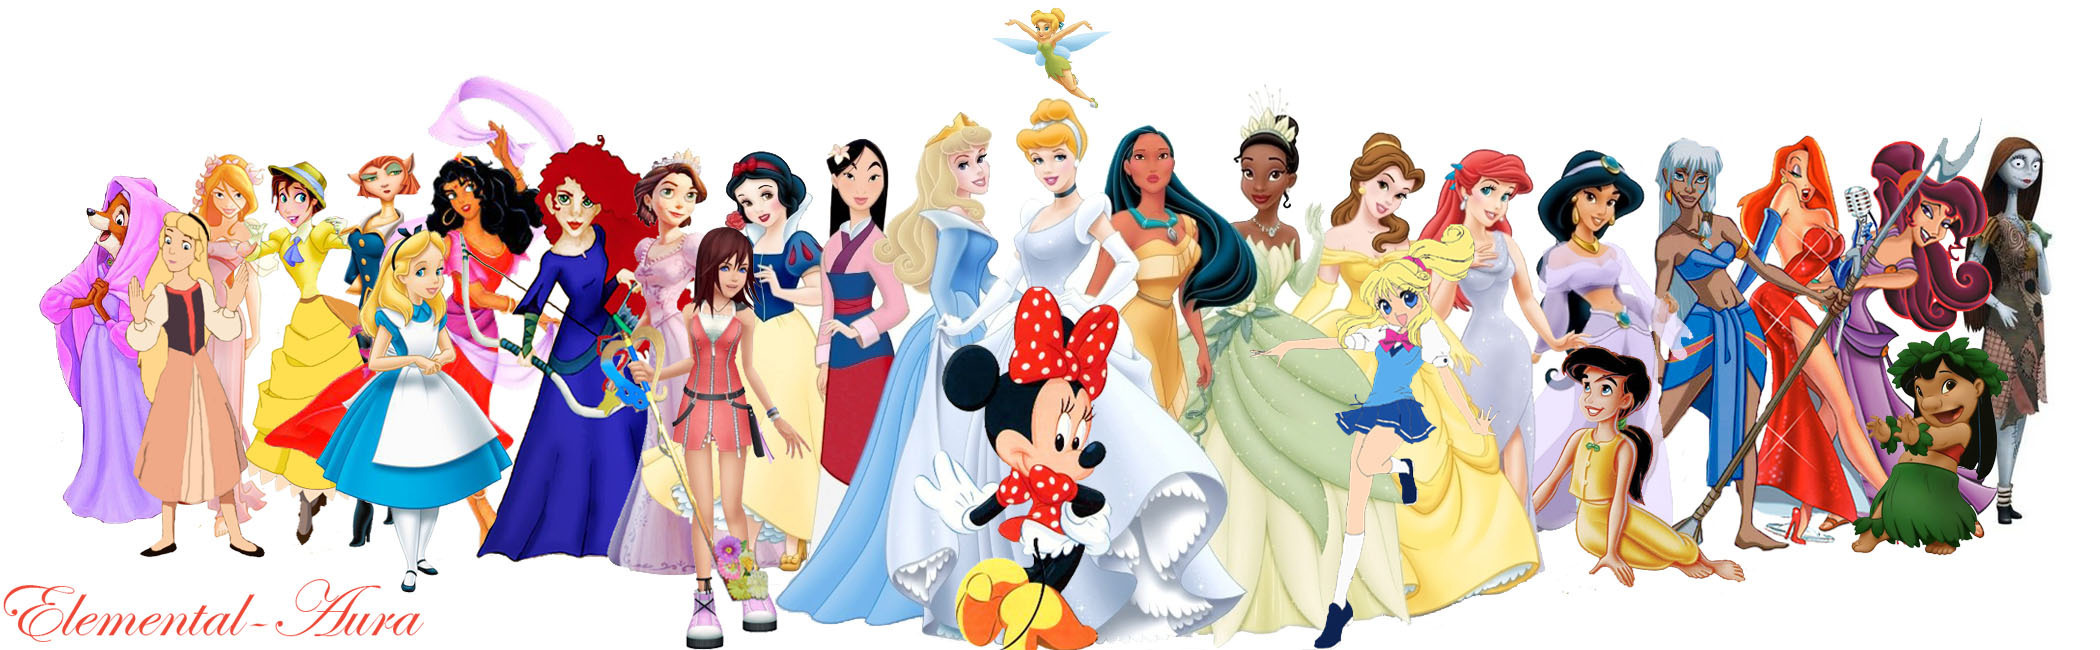 Disney Princess and Entourage - Disney Princess Photo (19906211) - Fanpop